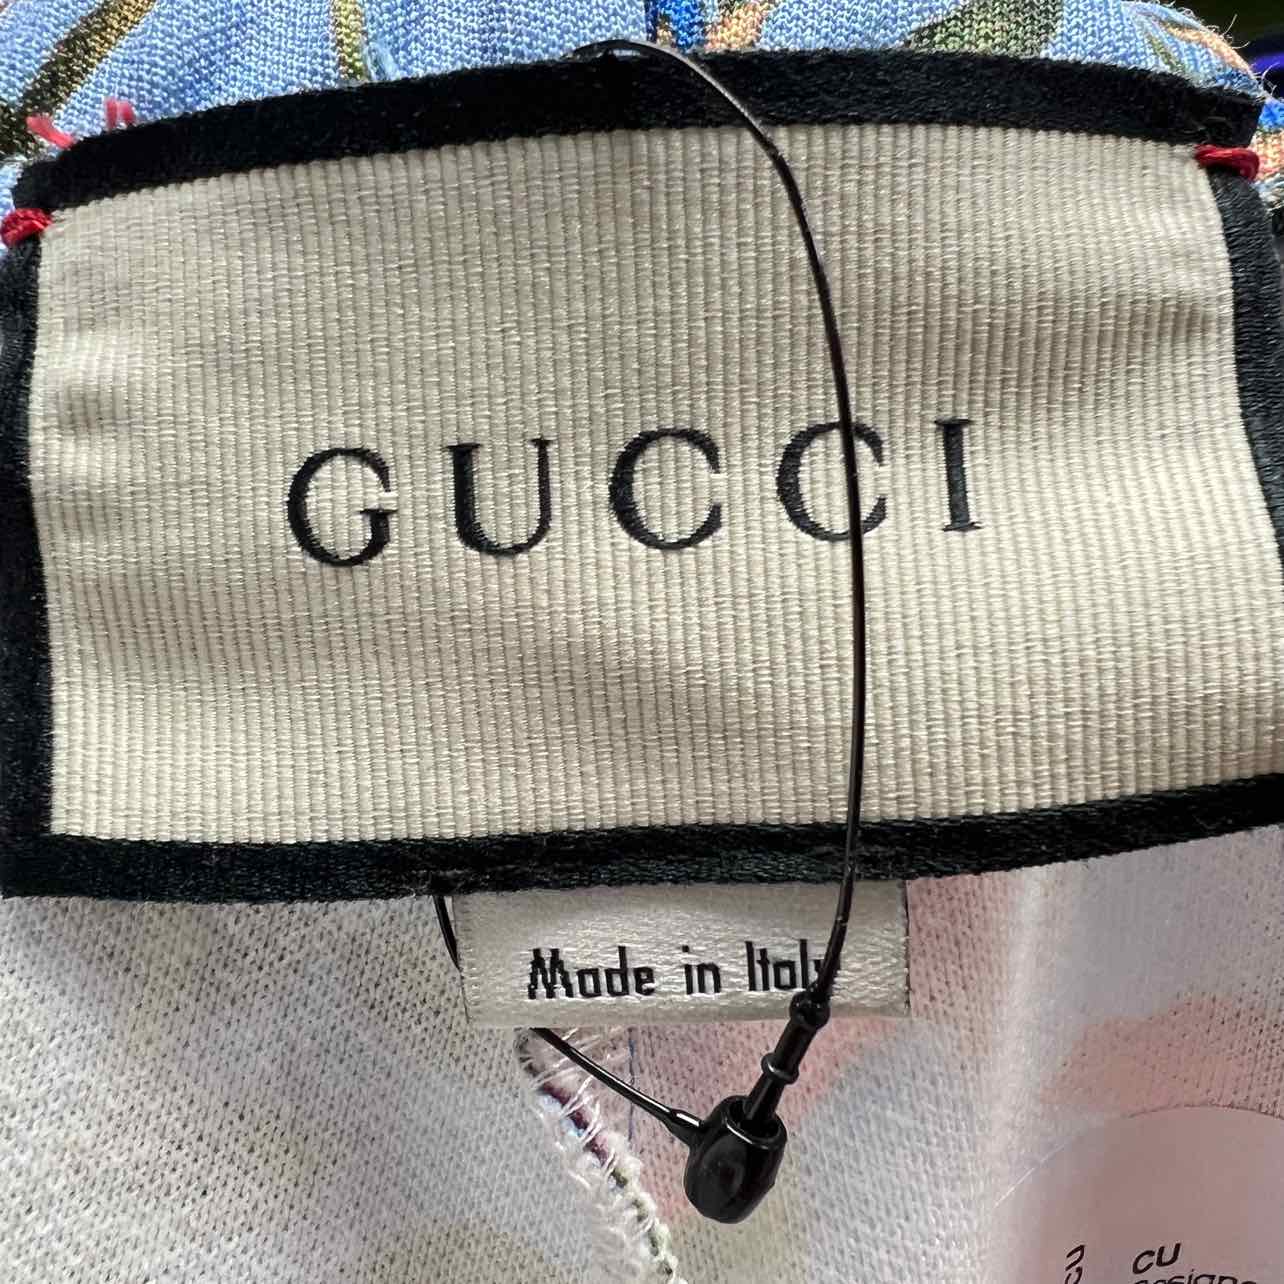 Gucci Sweatpants "FLORAL" Multicolor Used Size S